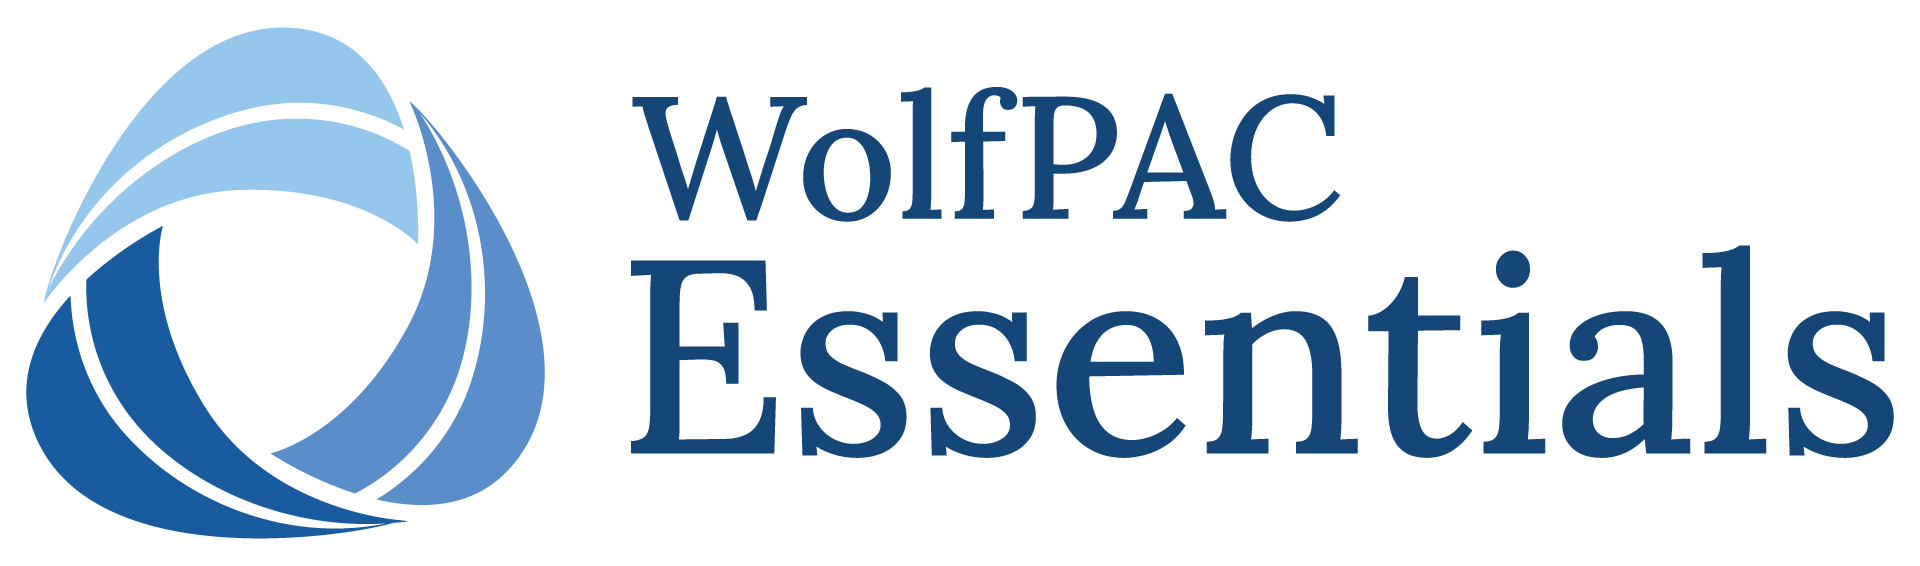 wolfpac-essentials-logo-final